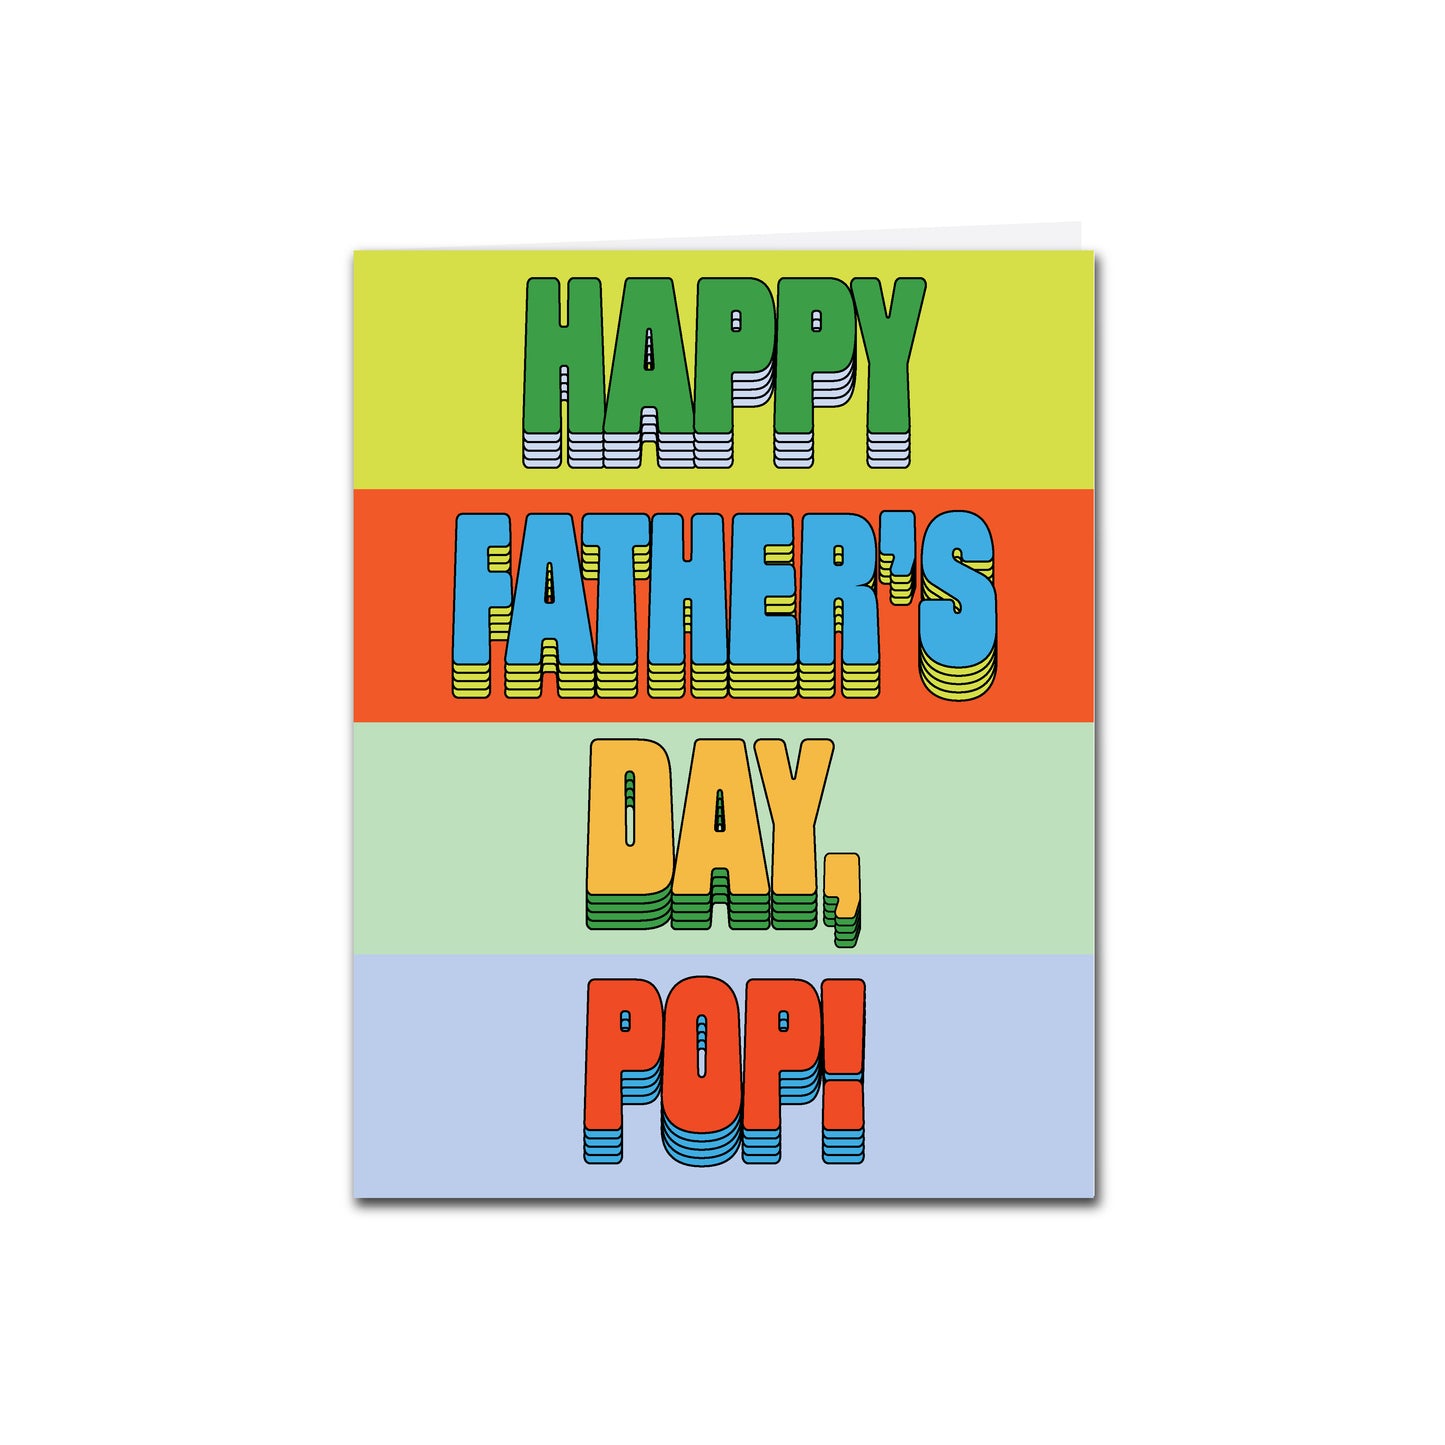 HAPPY FATHER'S DAY, POP!